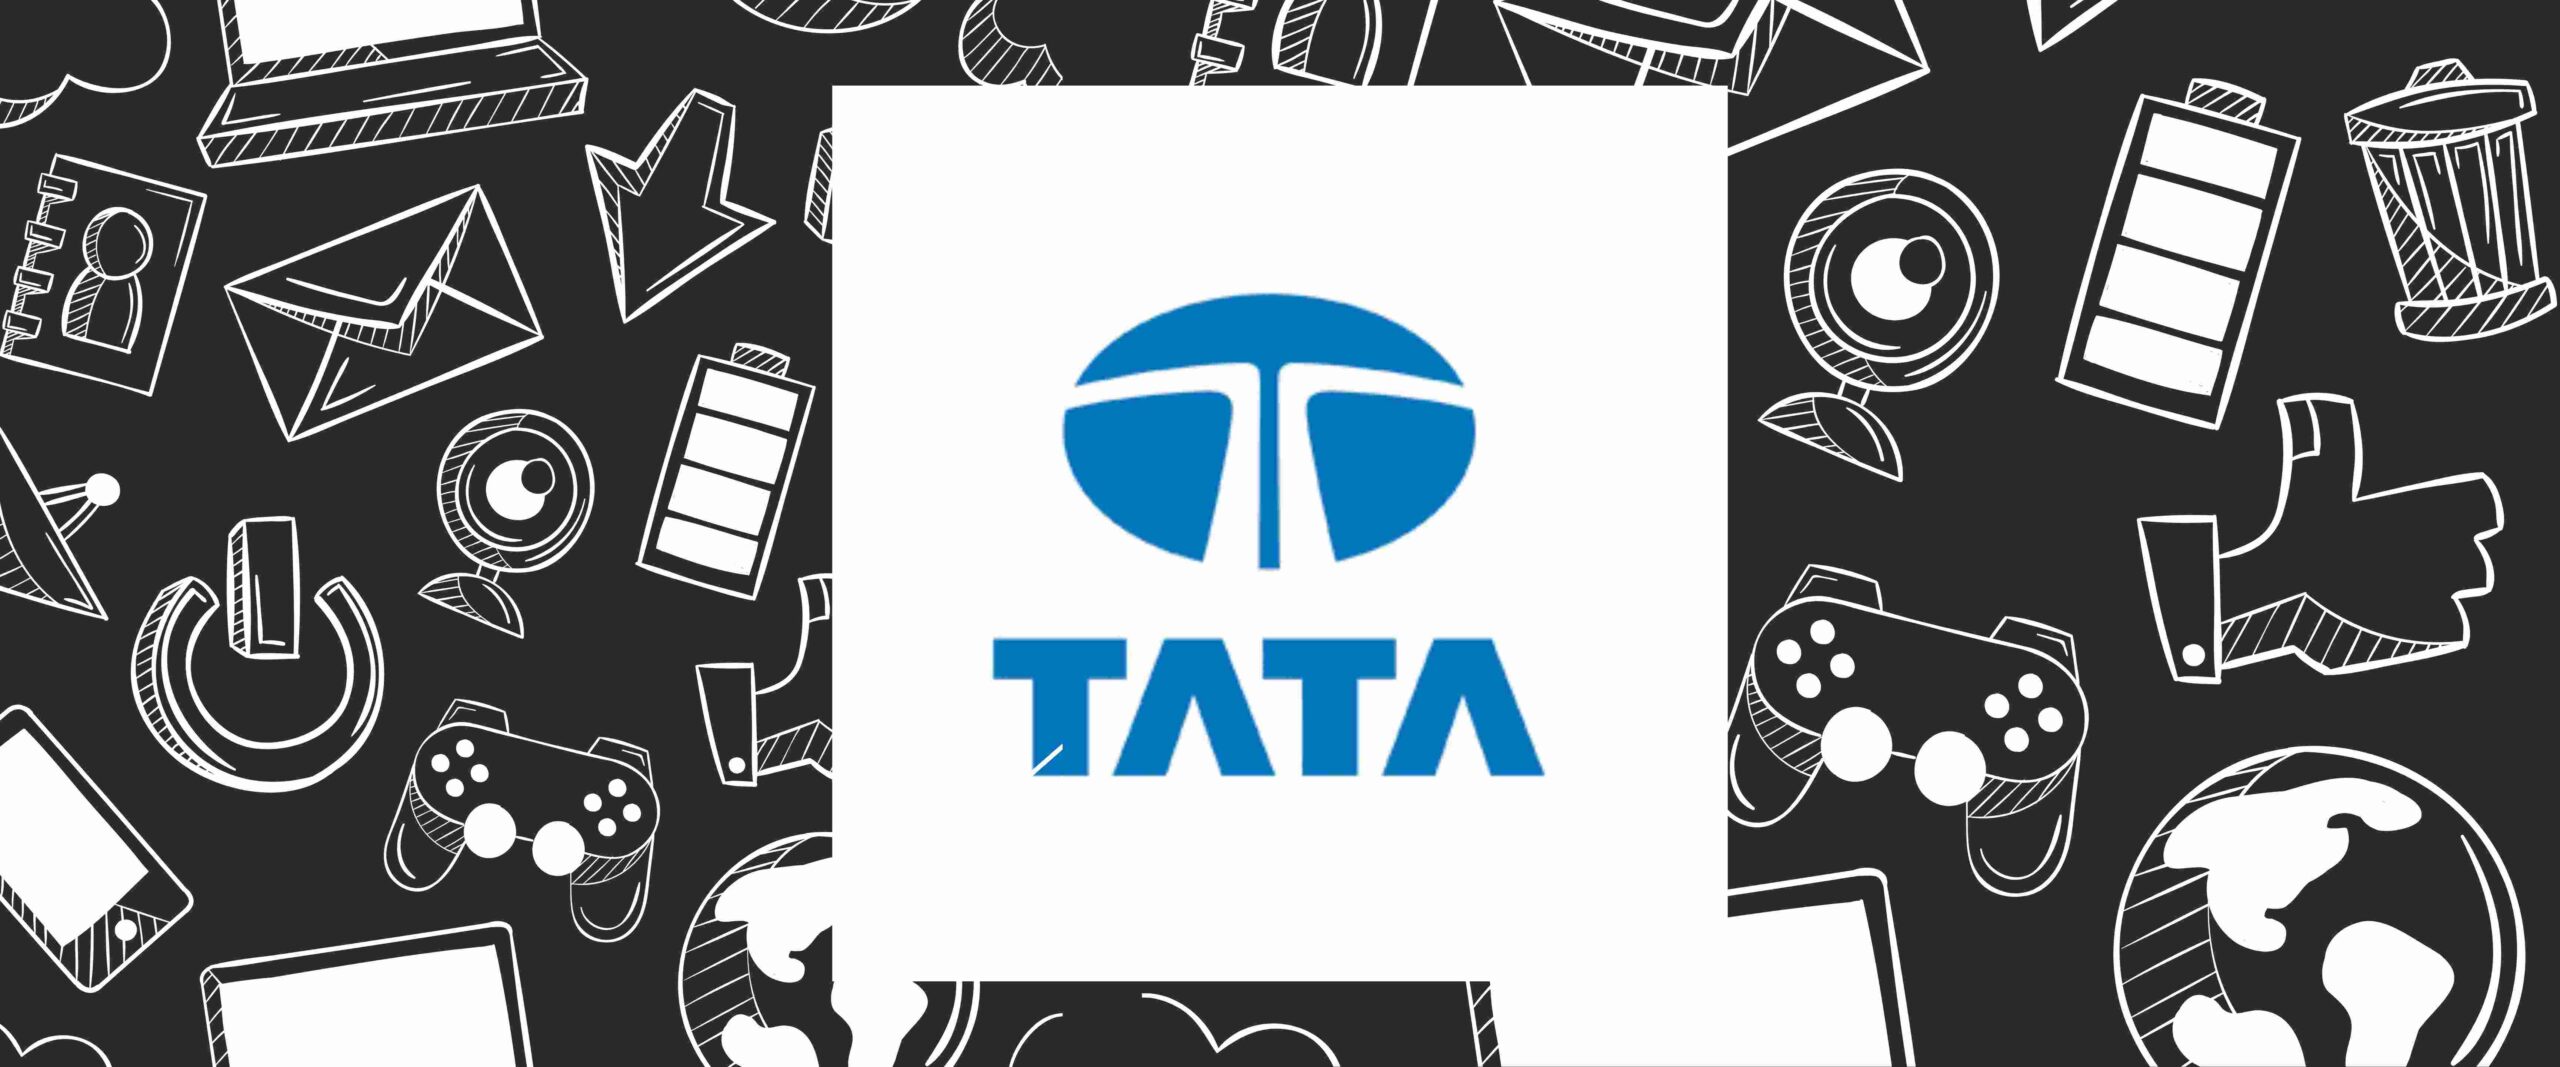 tata-technologies-ipo-a-good-investment-opportunity-patringa